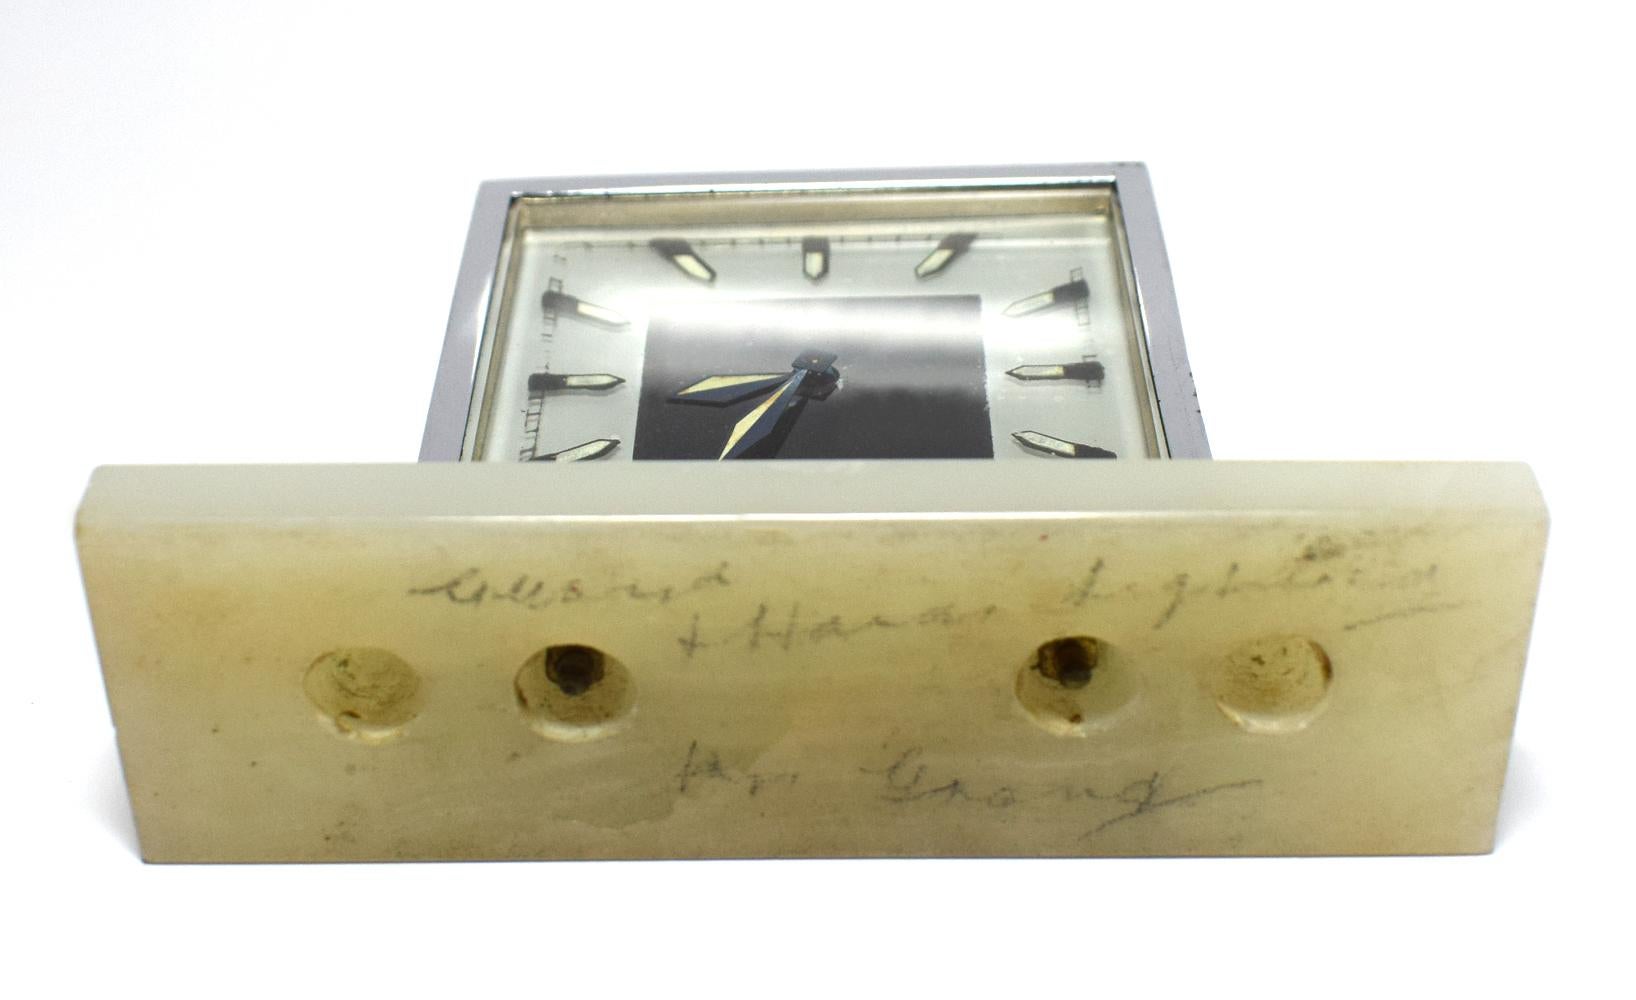 20th Century Art Deco Modernist 1930s Alarm Clock in Chrome and Oynx